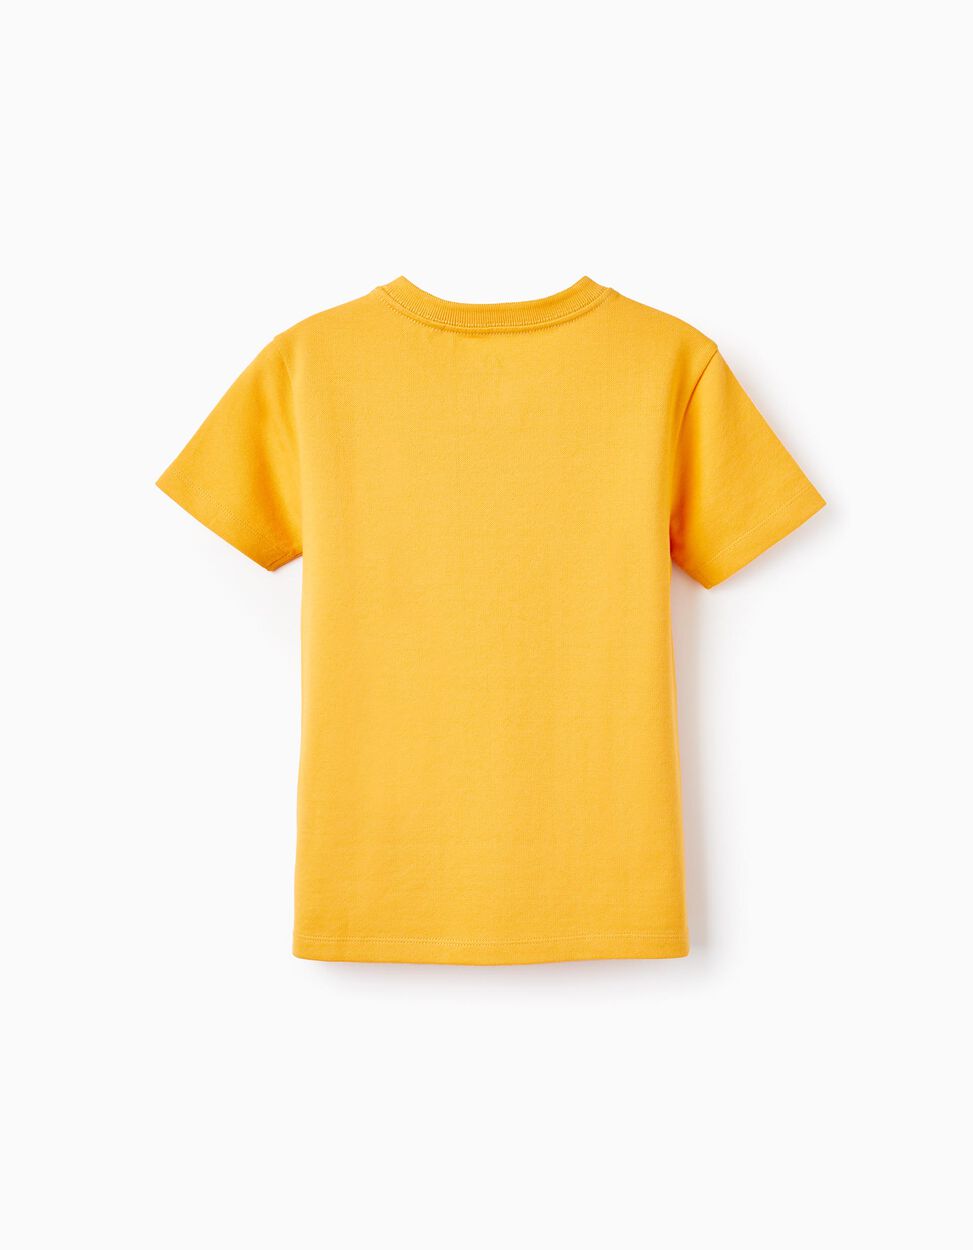 Comprar Online Camiseta de Manga Corta en Piqué de Algodón para Niño, Amarillo